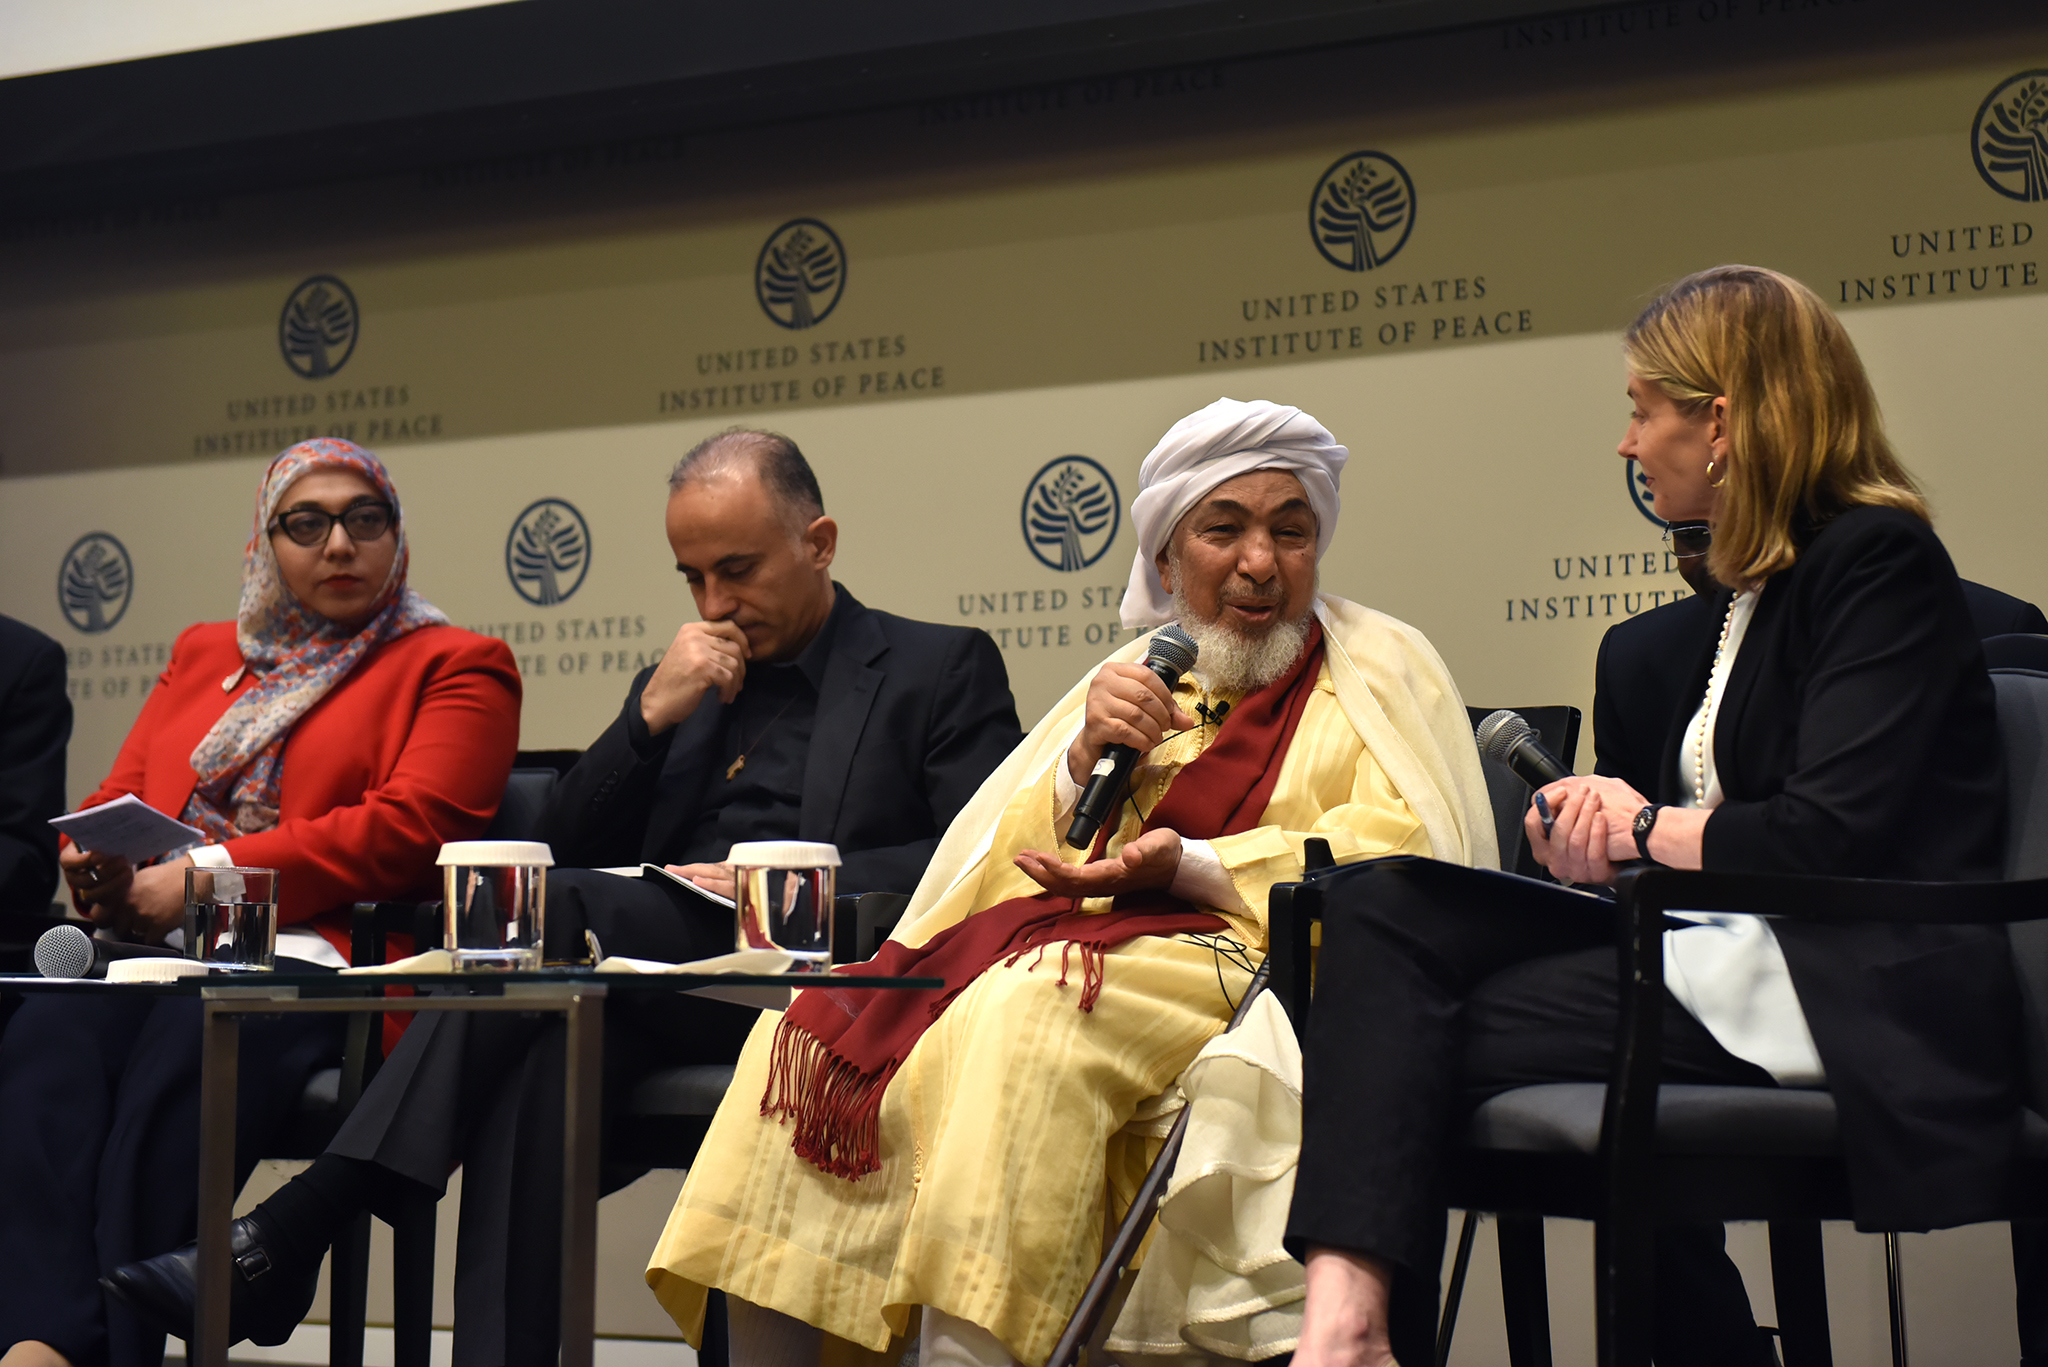 From left: Humera Khan; Rev. Prof. Fadi Daou; Sheikh Abdullah bin Bayyah; Nancy Lindborg.